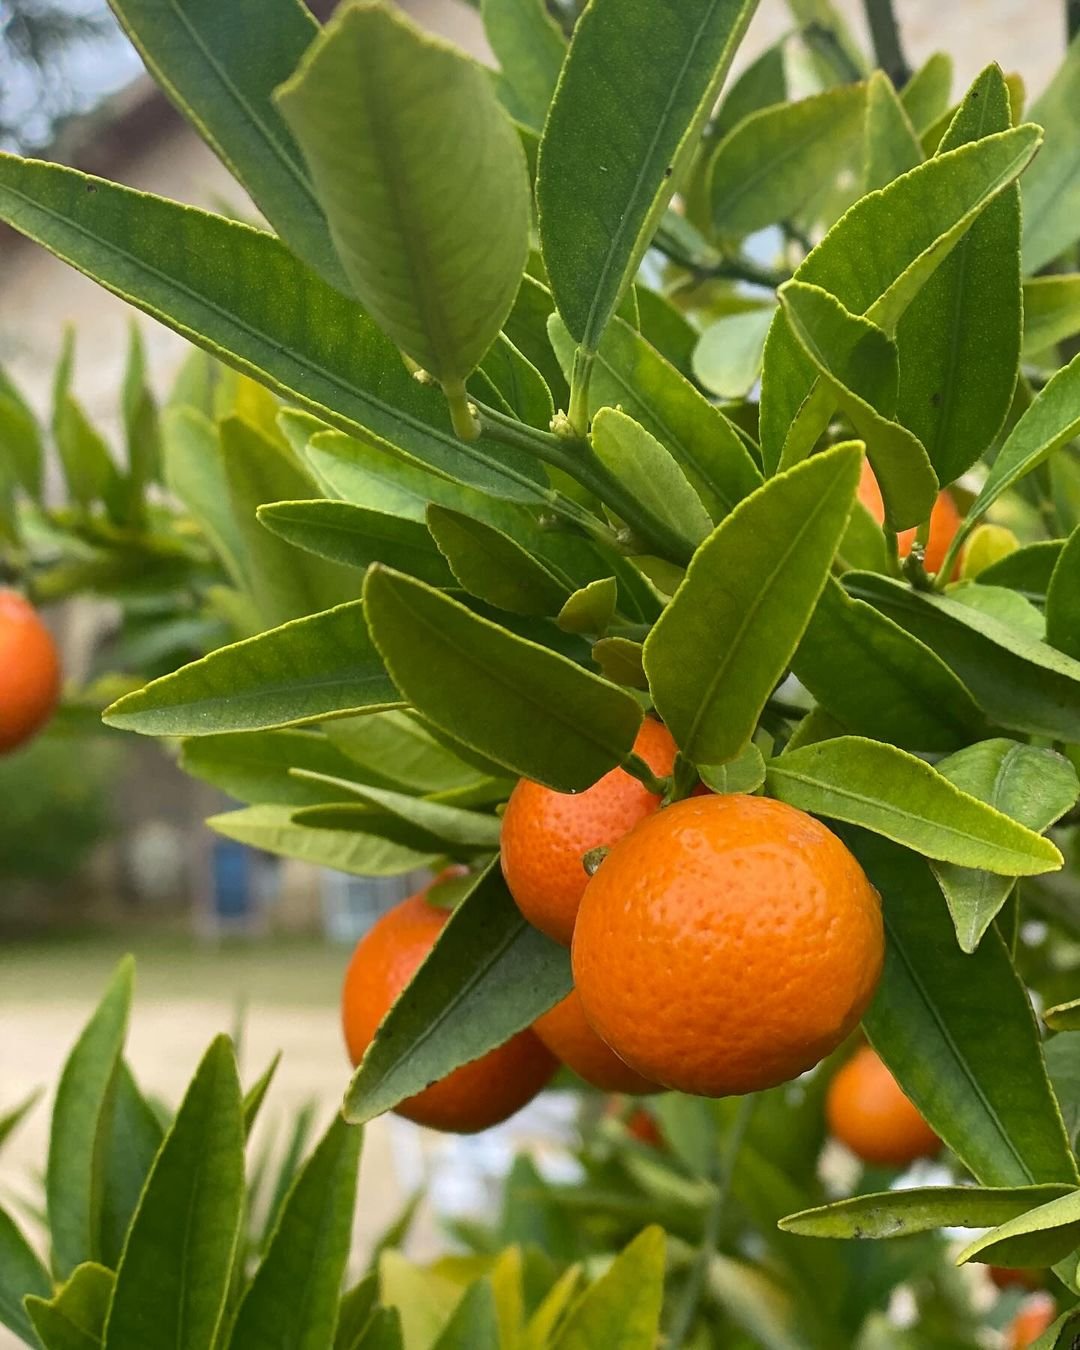 Mandarin orange tree with ripe fruit hanging on the branch.